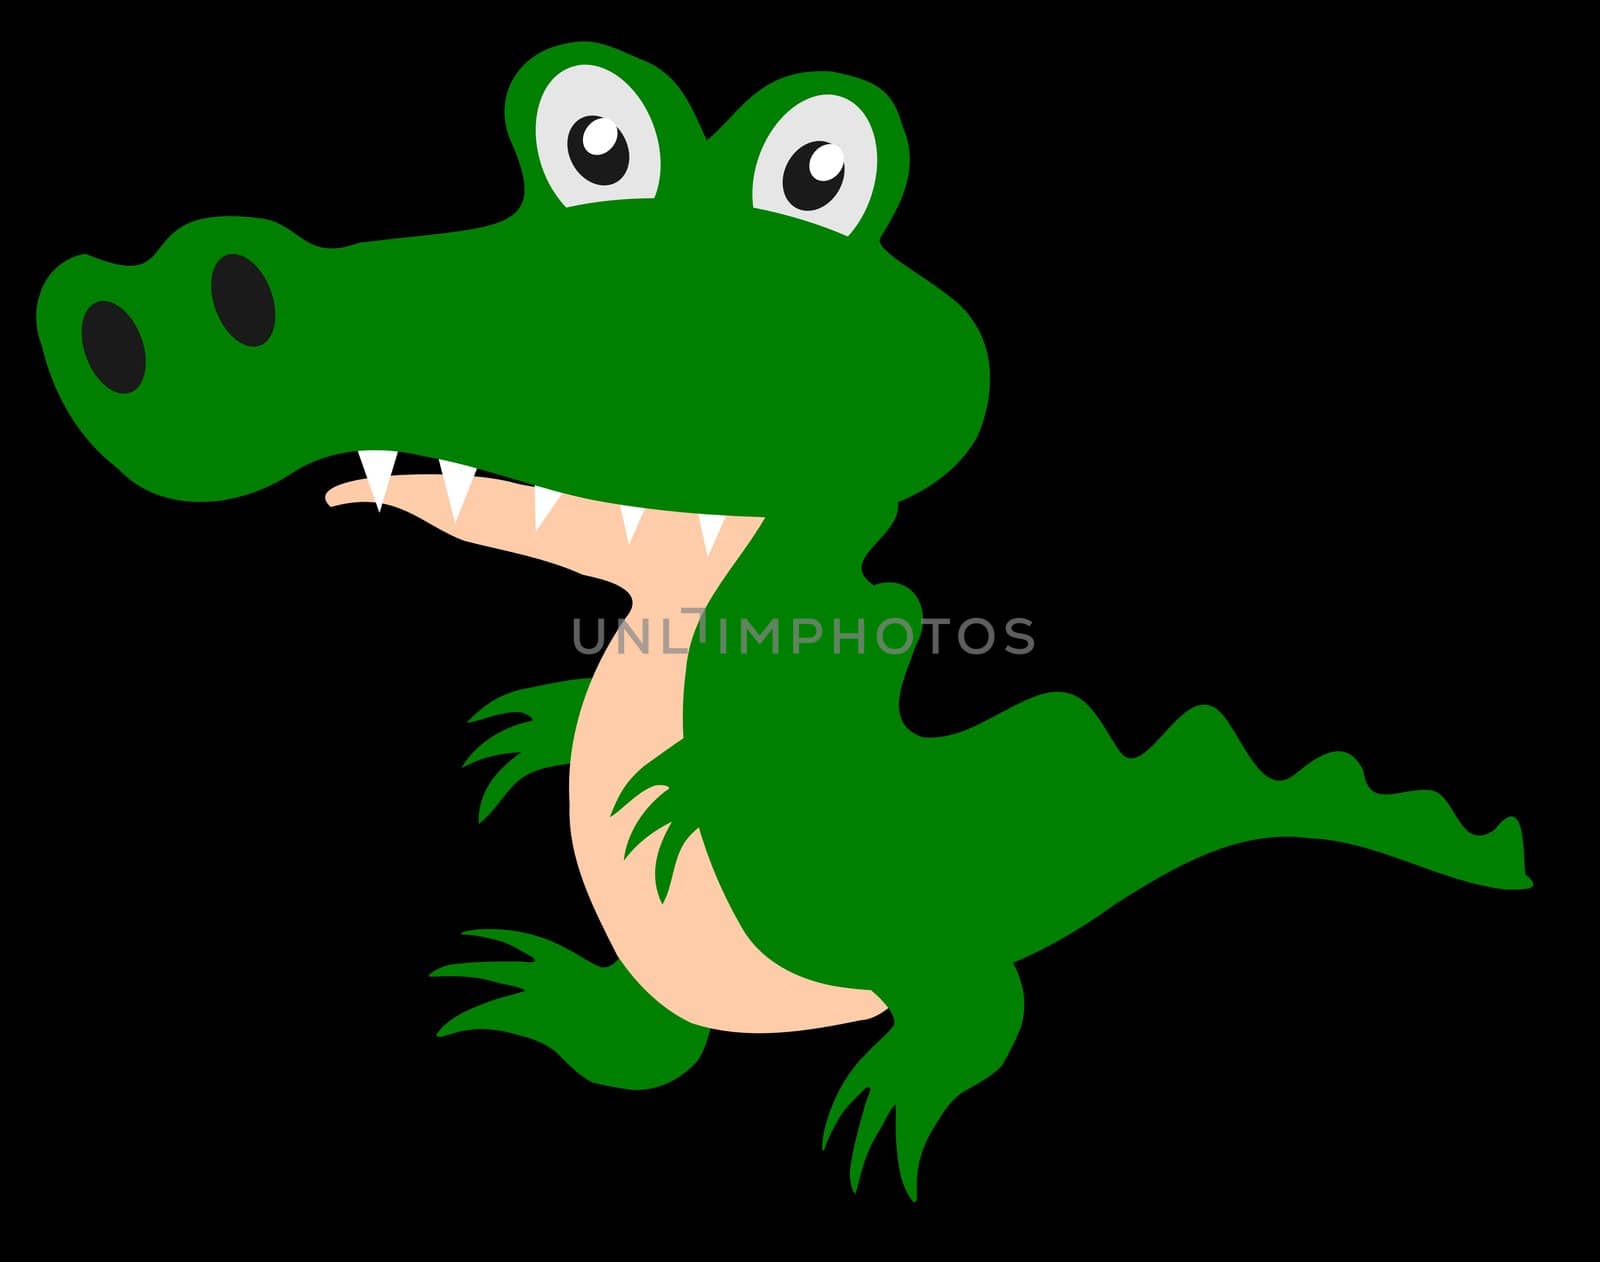 Illustration of a cartoon Crocodile